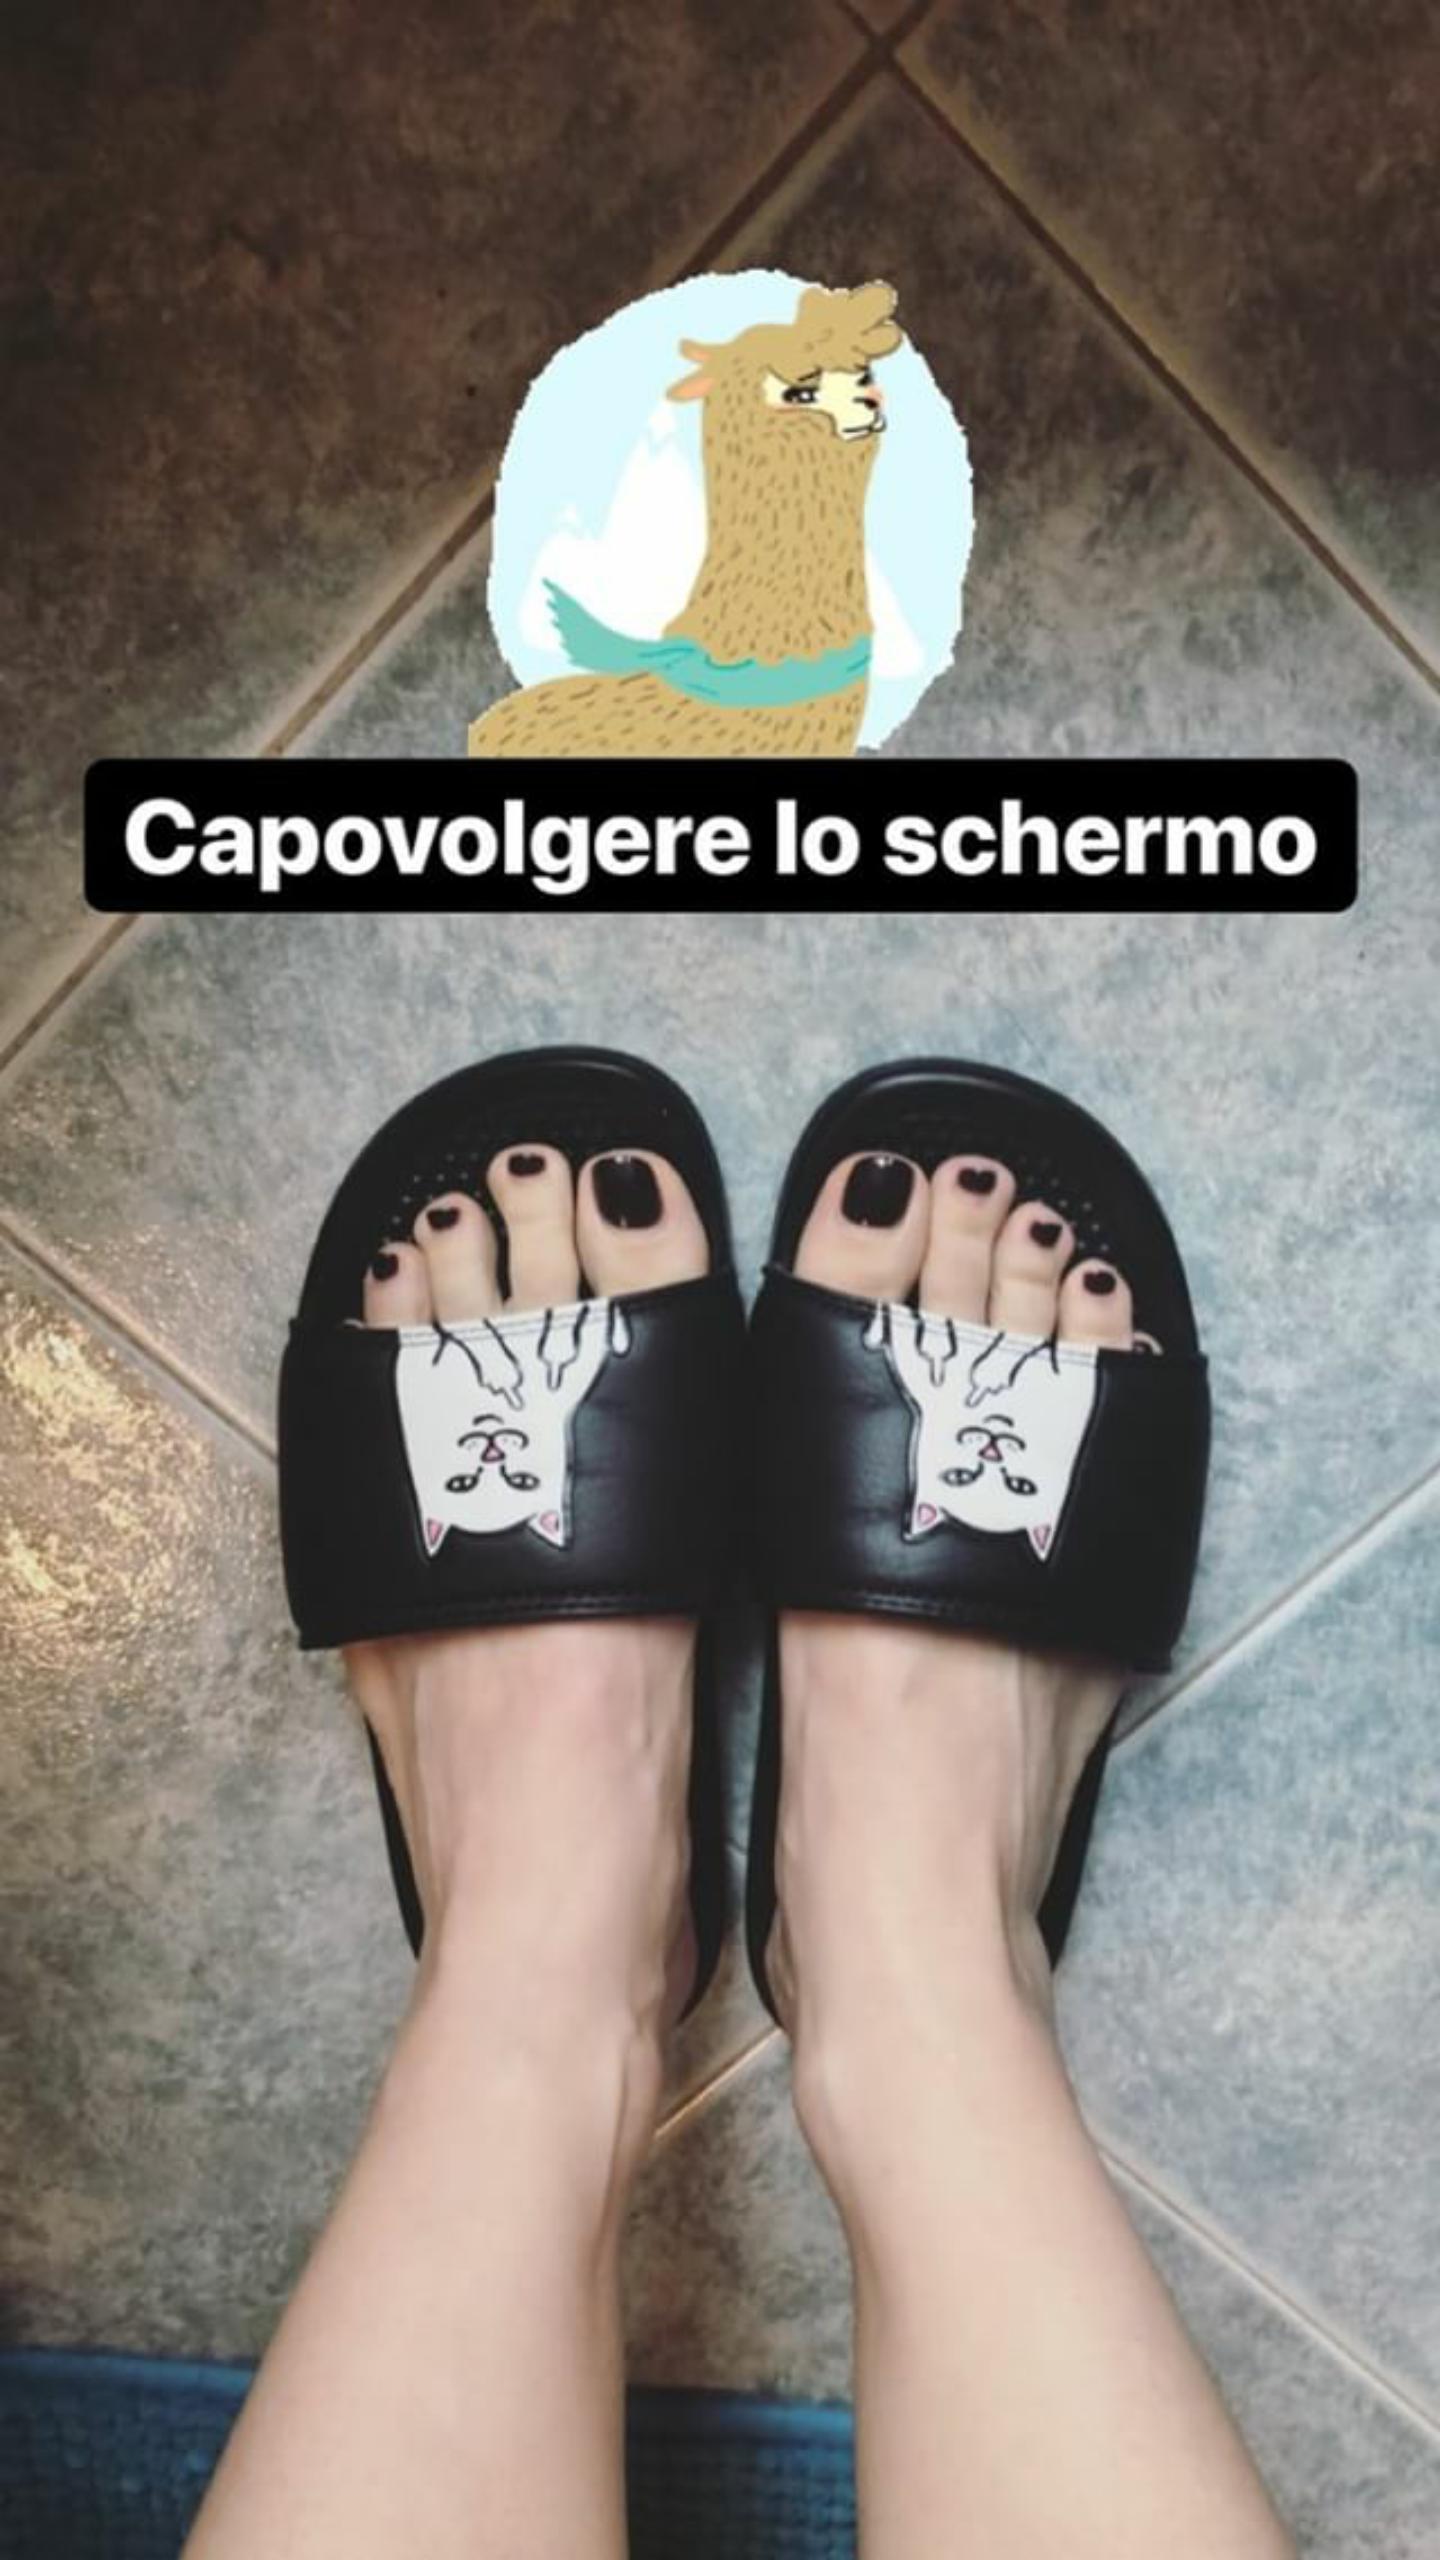 Cristina Scabbias Feet